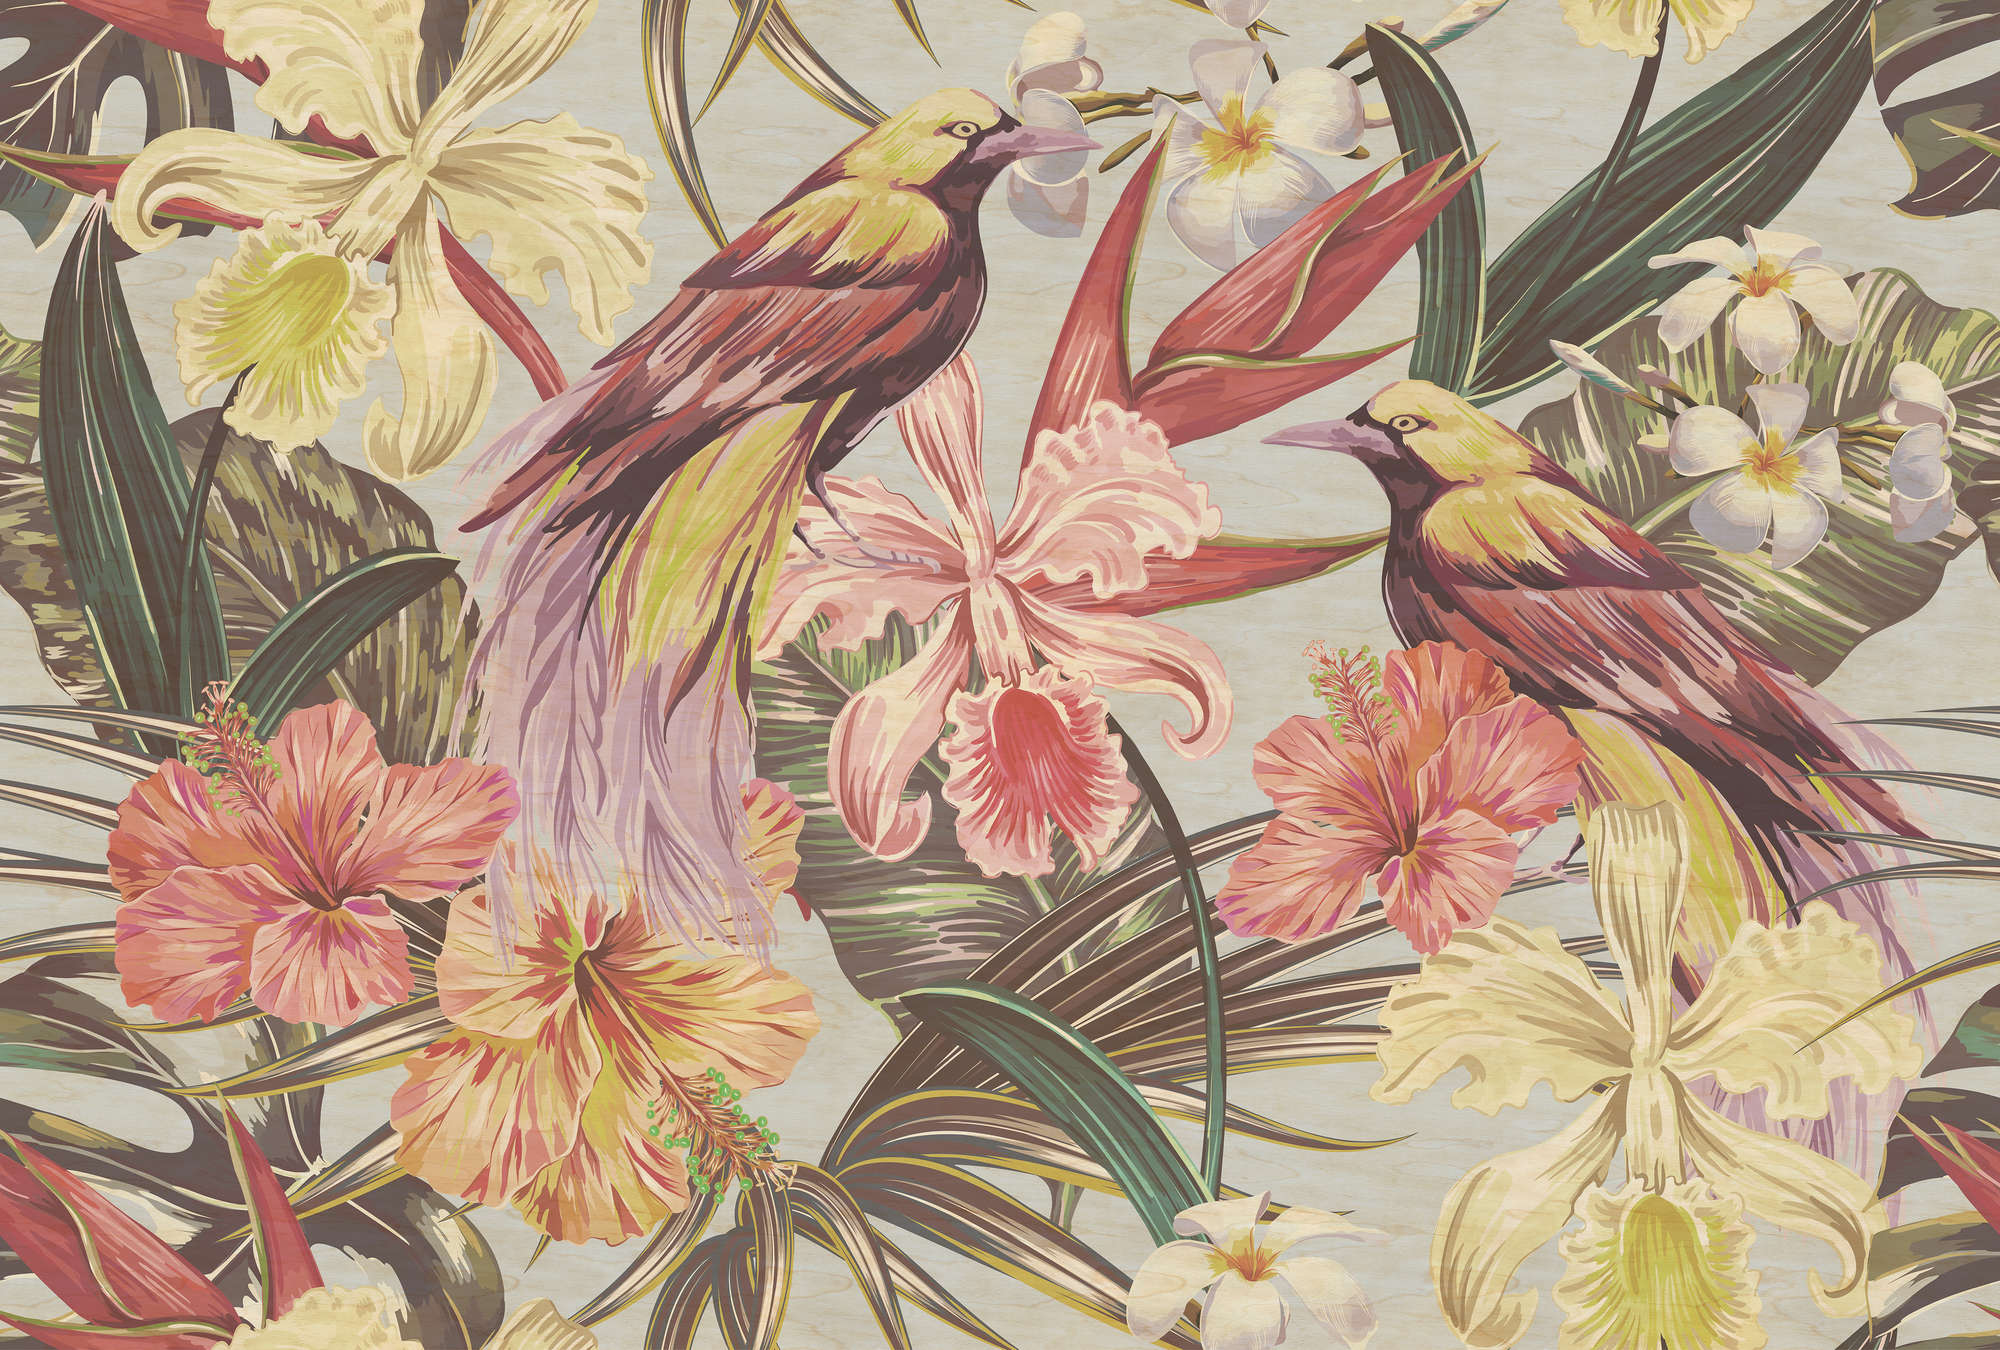             Pájaros exóticos 1 - Papel pintado Pájaros exóticos y flores en estructura contrachapada - Beige, Rosa | Vellón liso mate
        